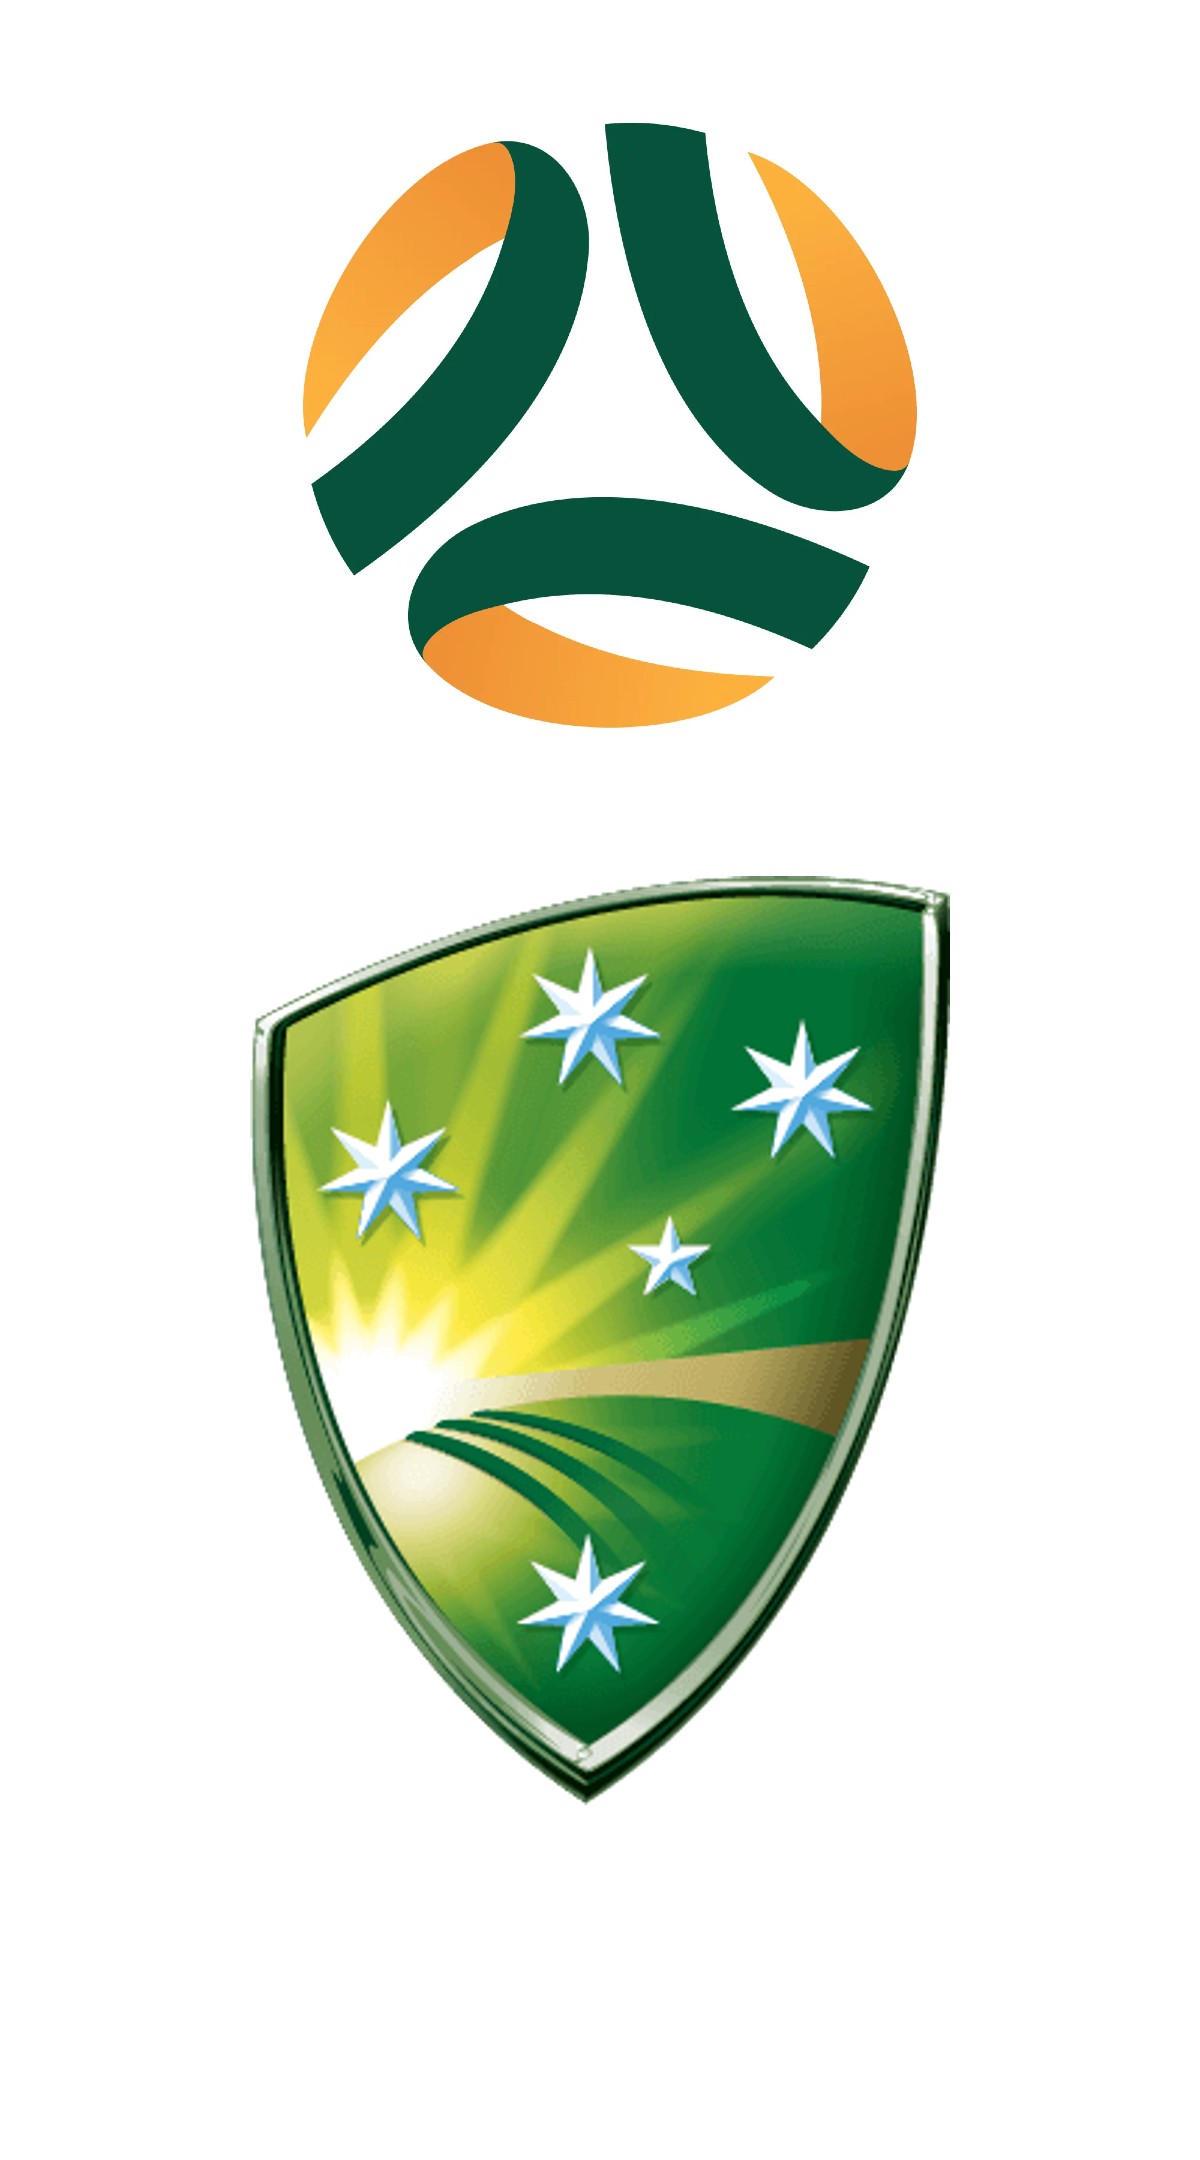 ICC Cricket World Cup Logo Designs (1975 – 2019)